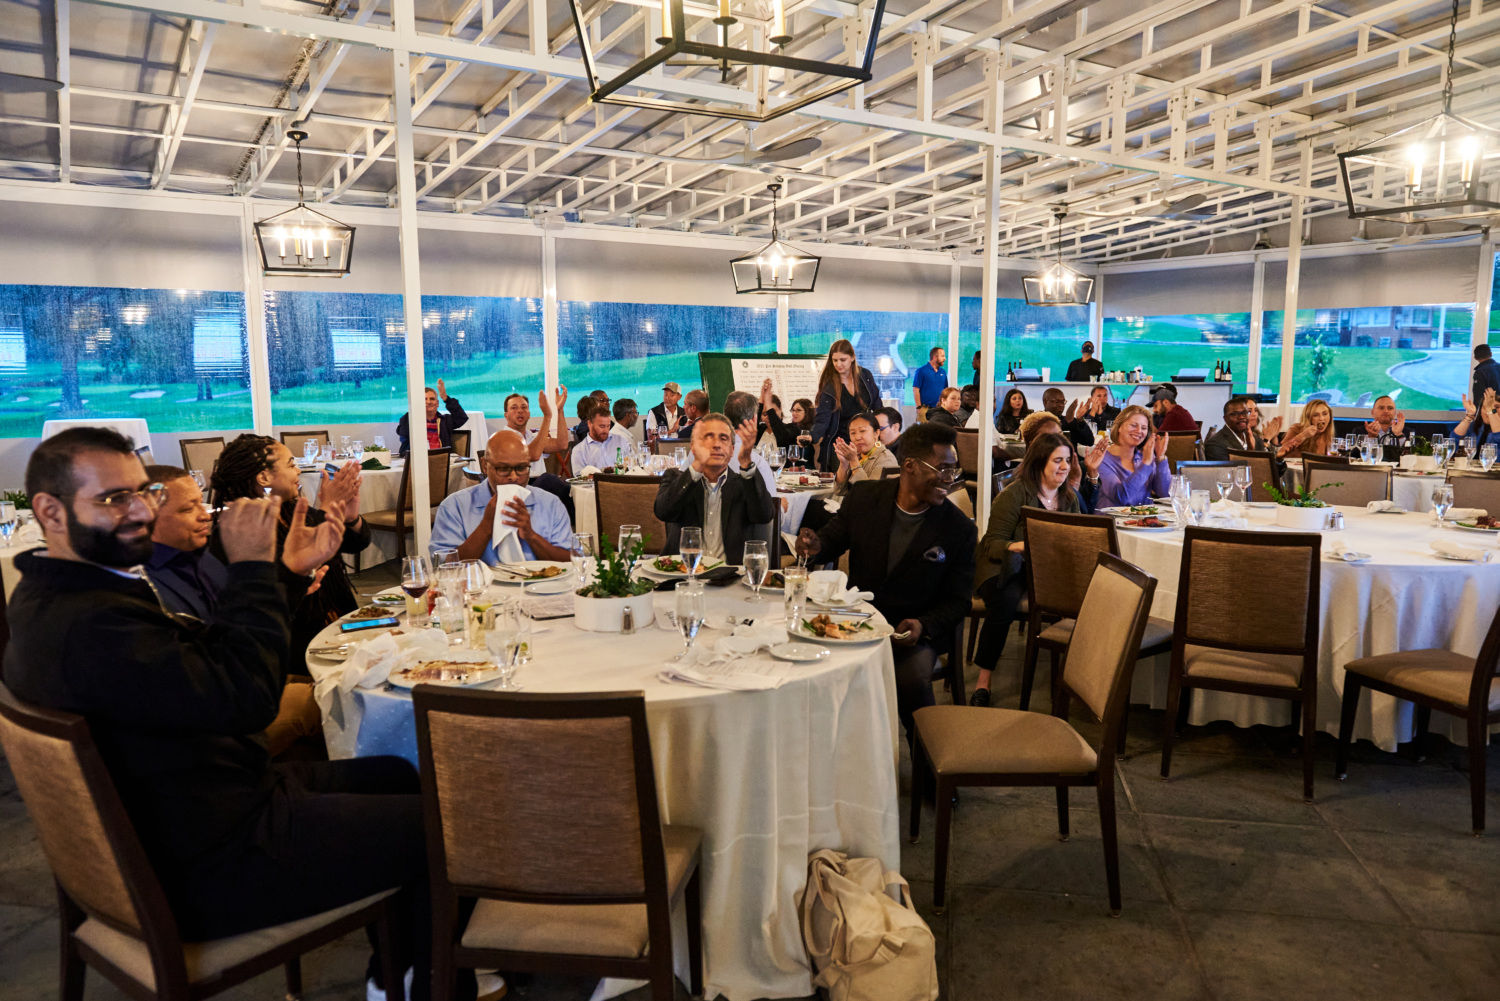 Golf tournament participants at awards dinner.